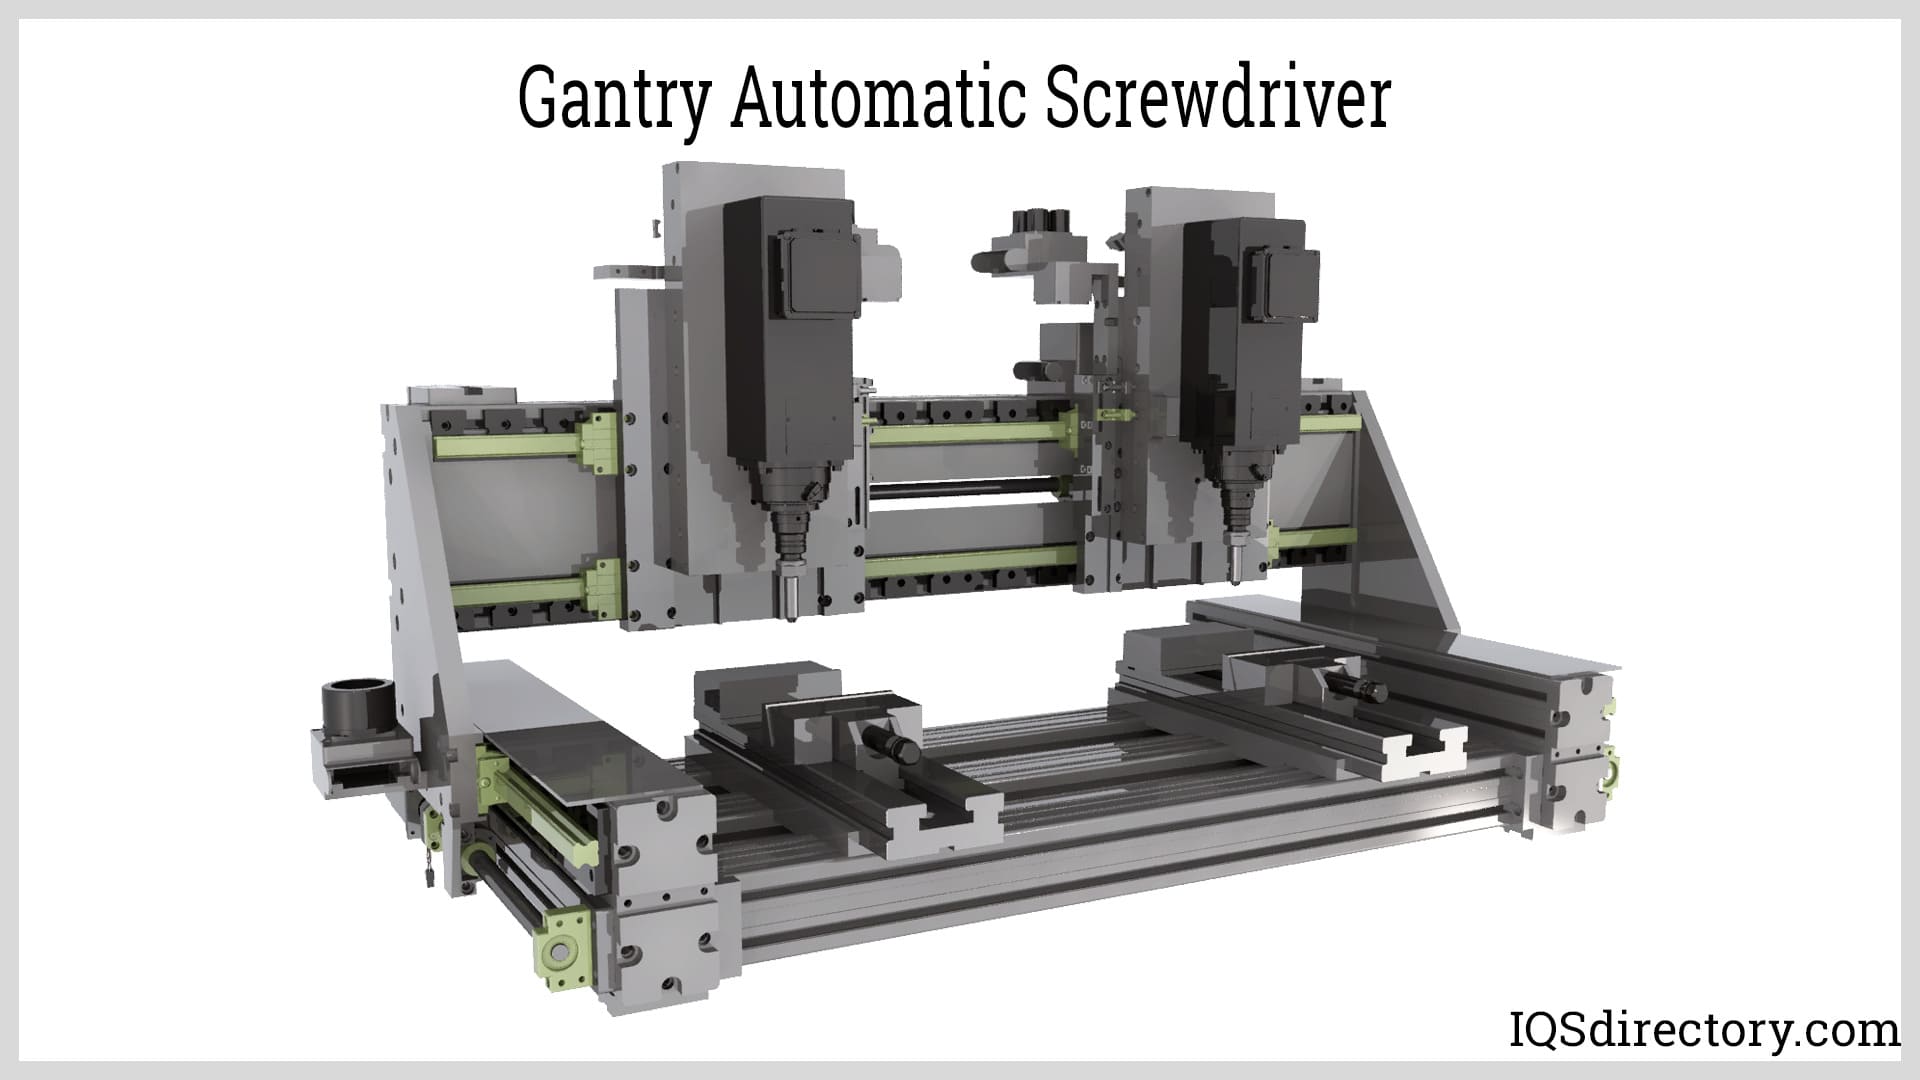 Gantry Automatic Screwdriver